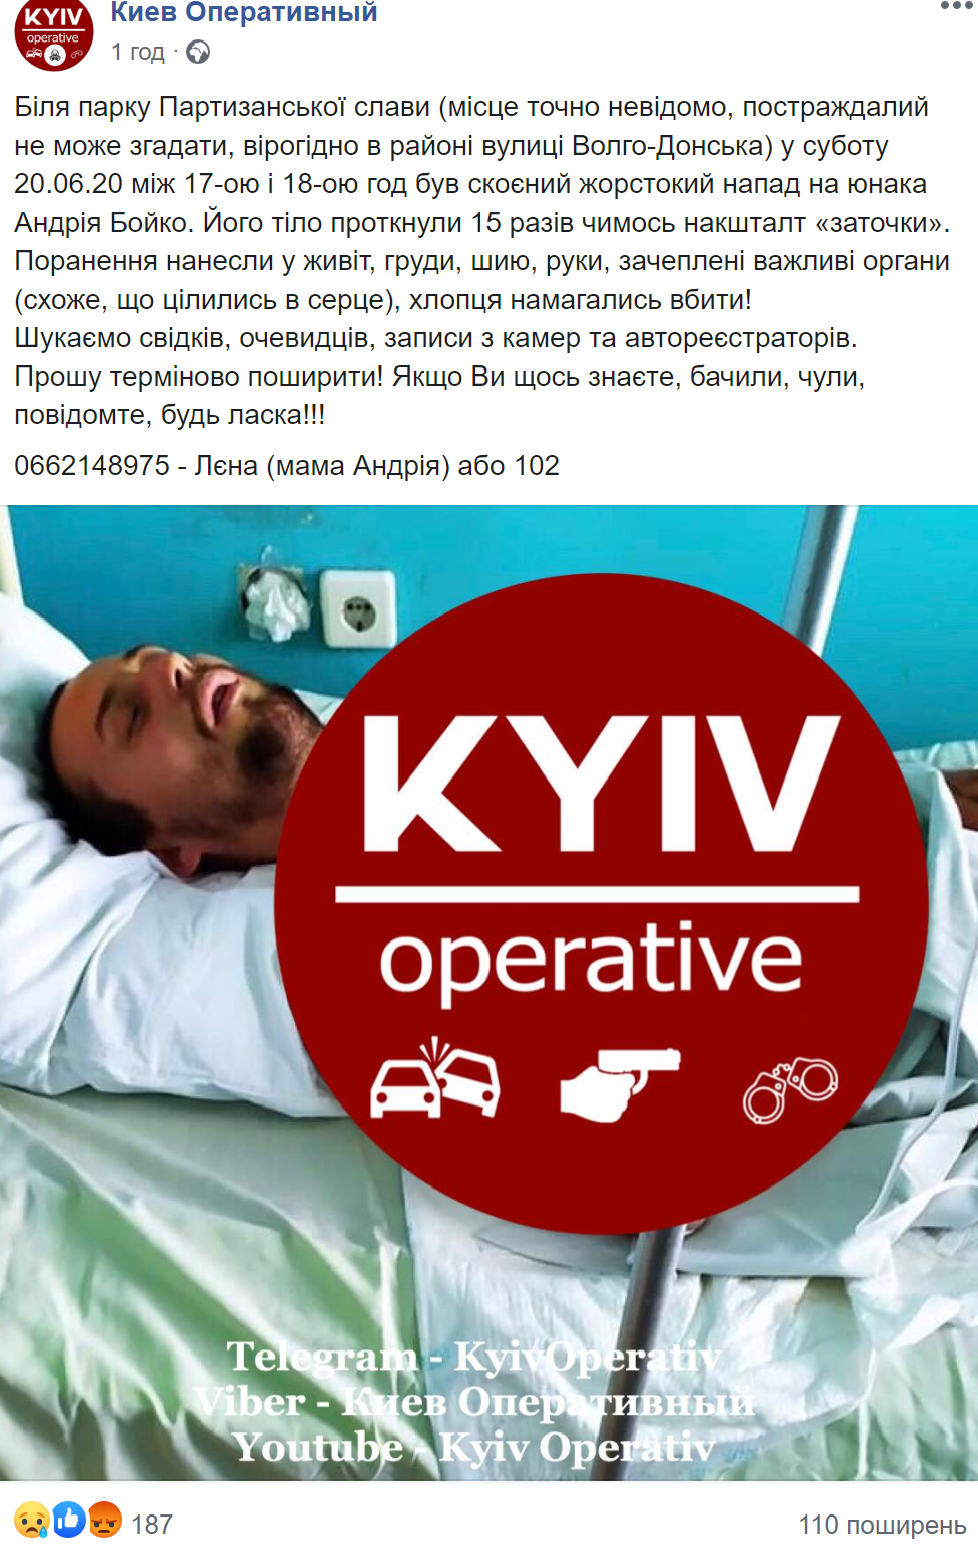 Пост о нападении на парня в Киеве